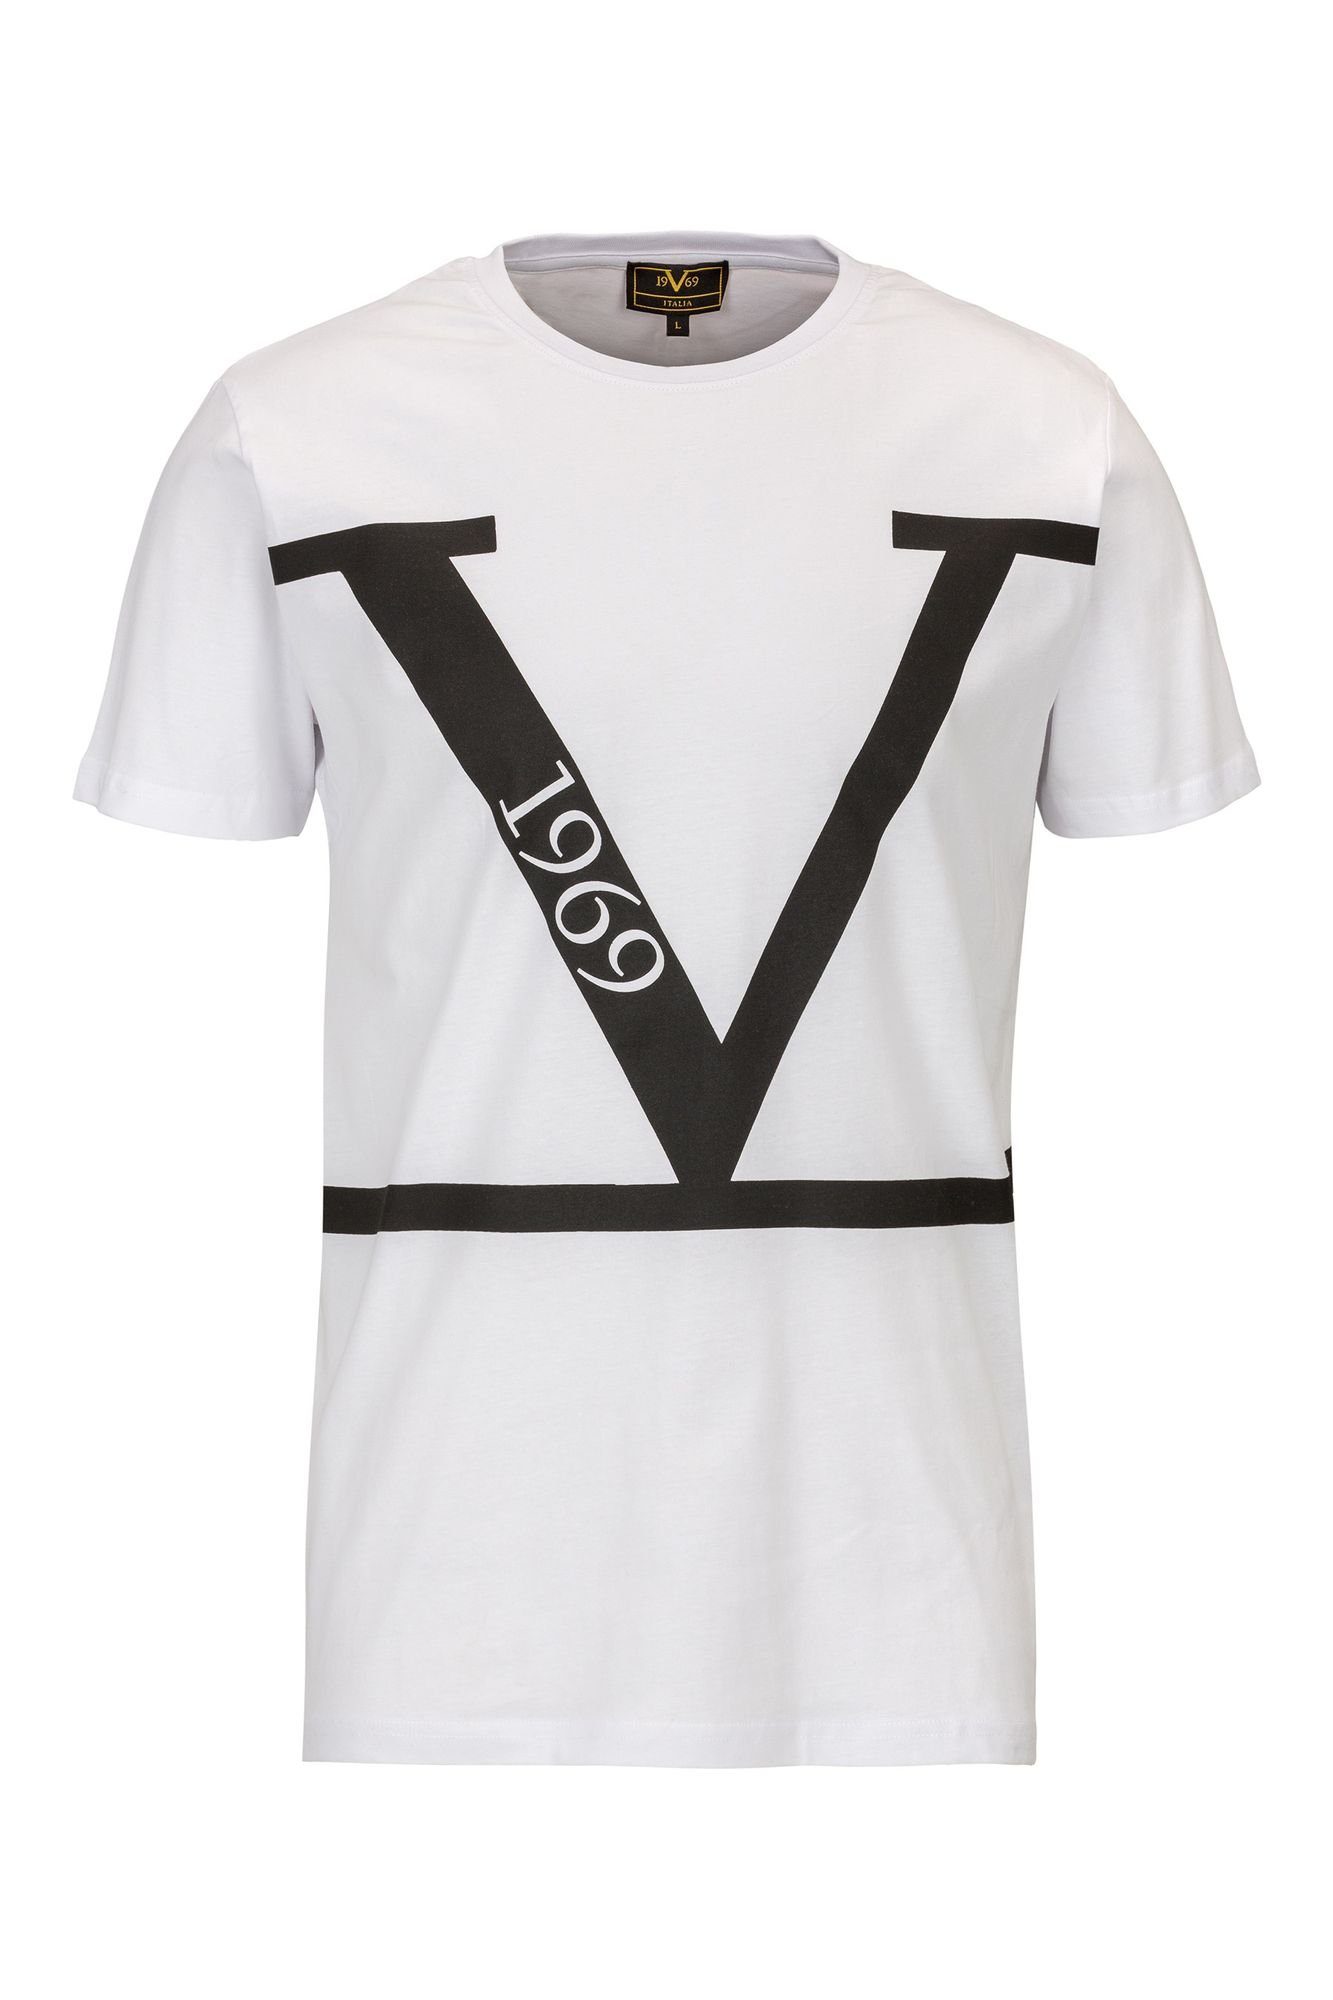 by Italia Gabriel 19V69 Versace T-Shirt